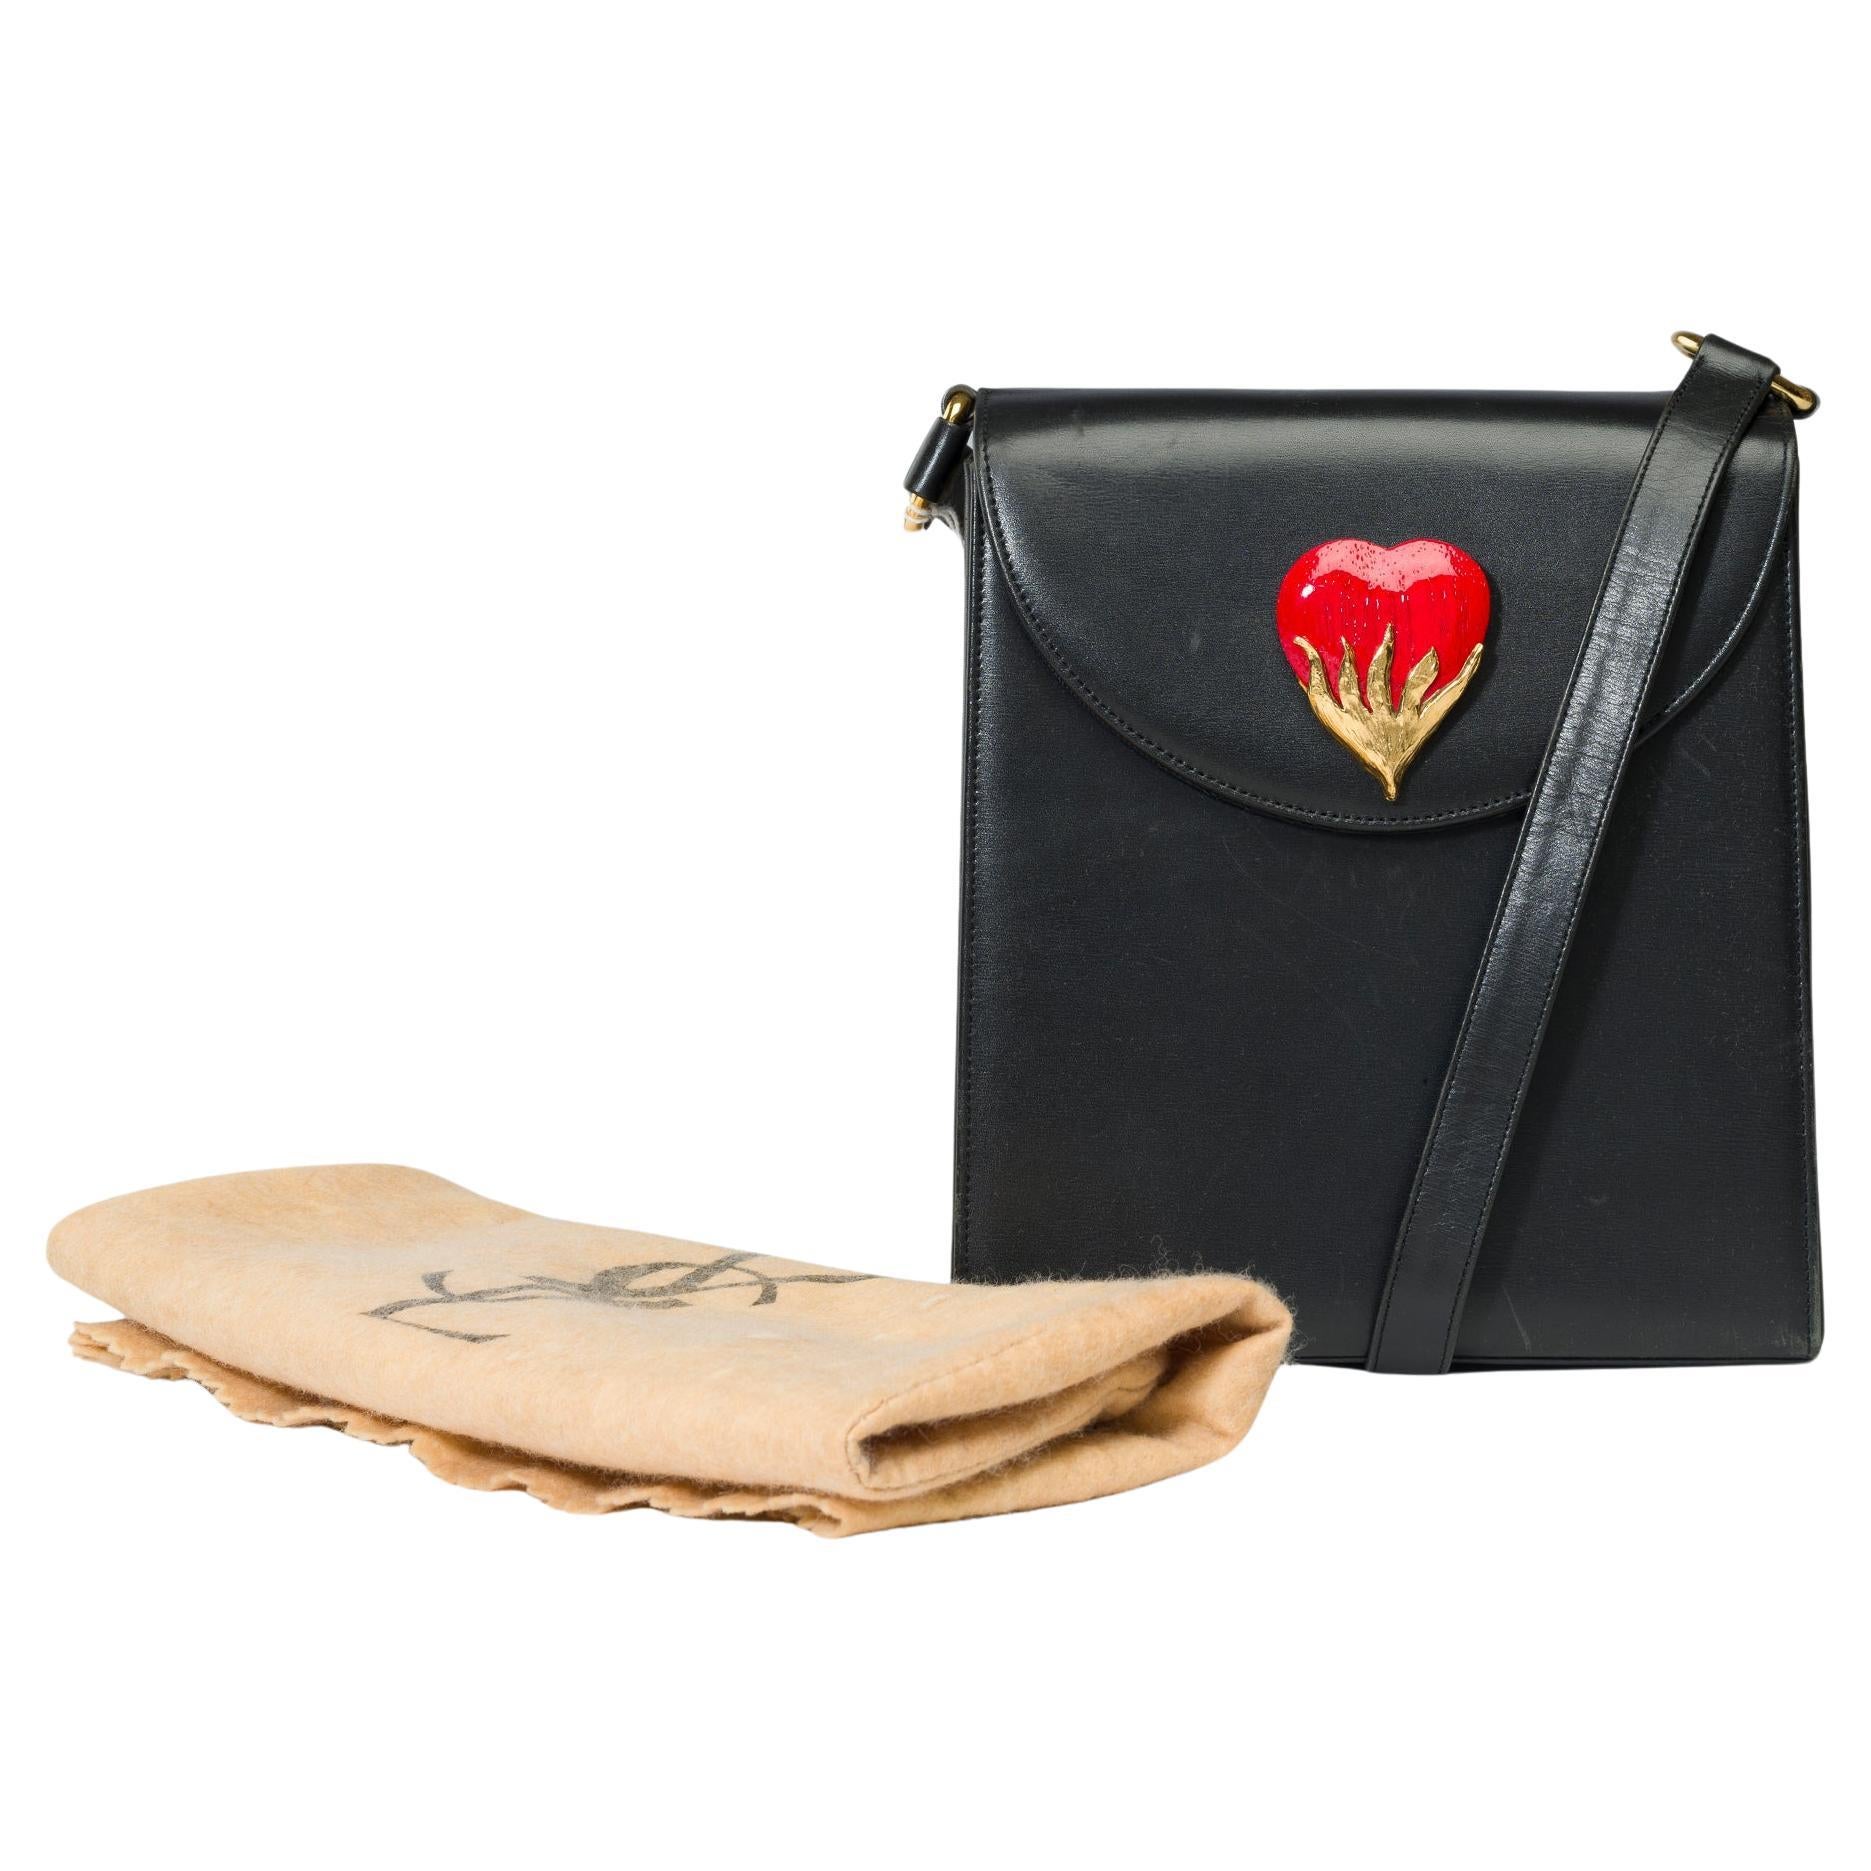 Lovely YSL vintage Messenger bag in black box calf leather, GHW For Sale